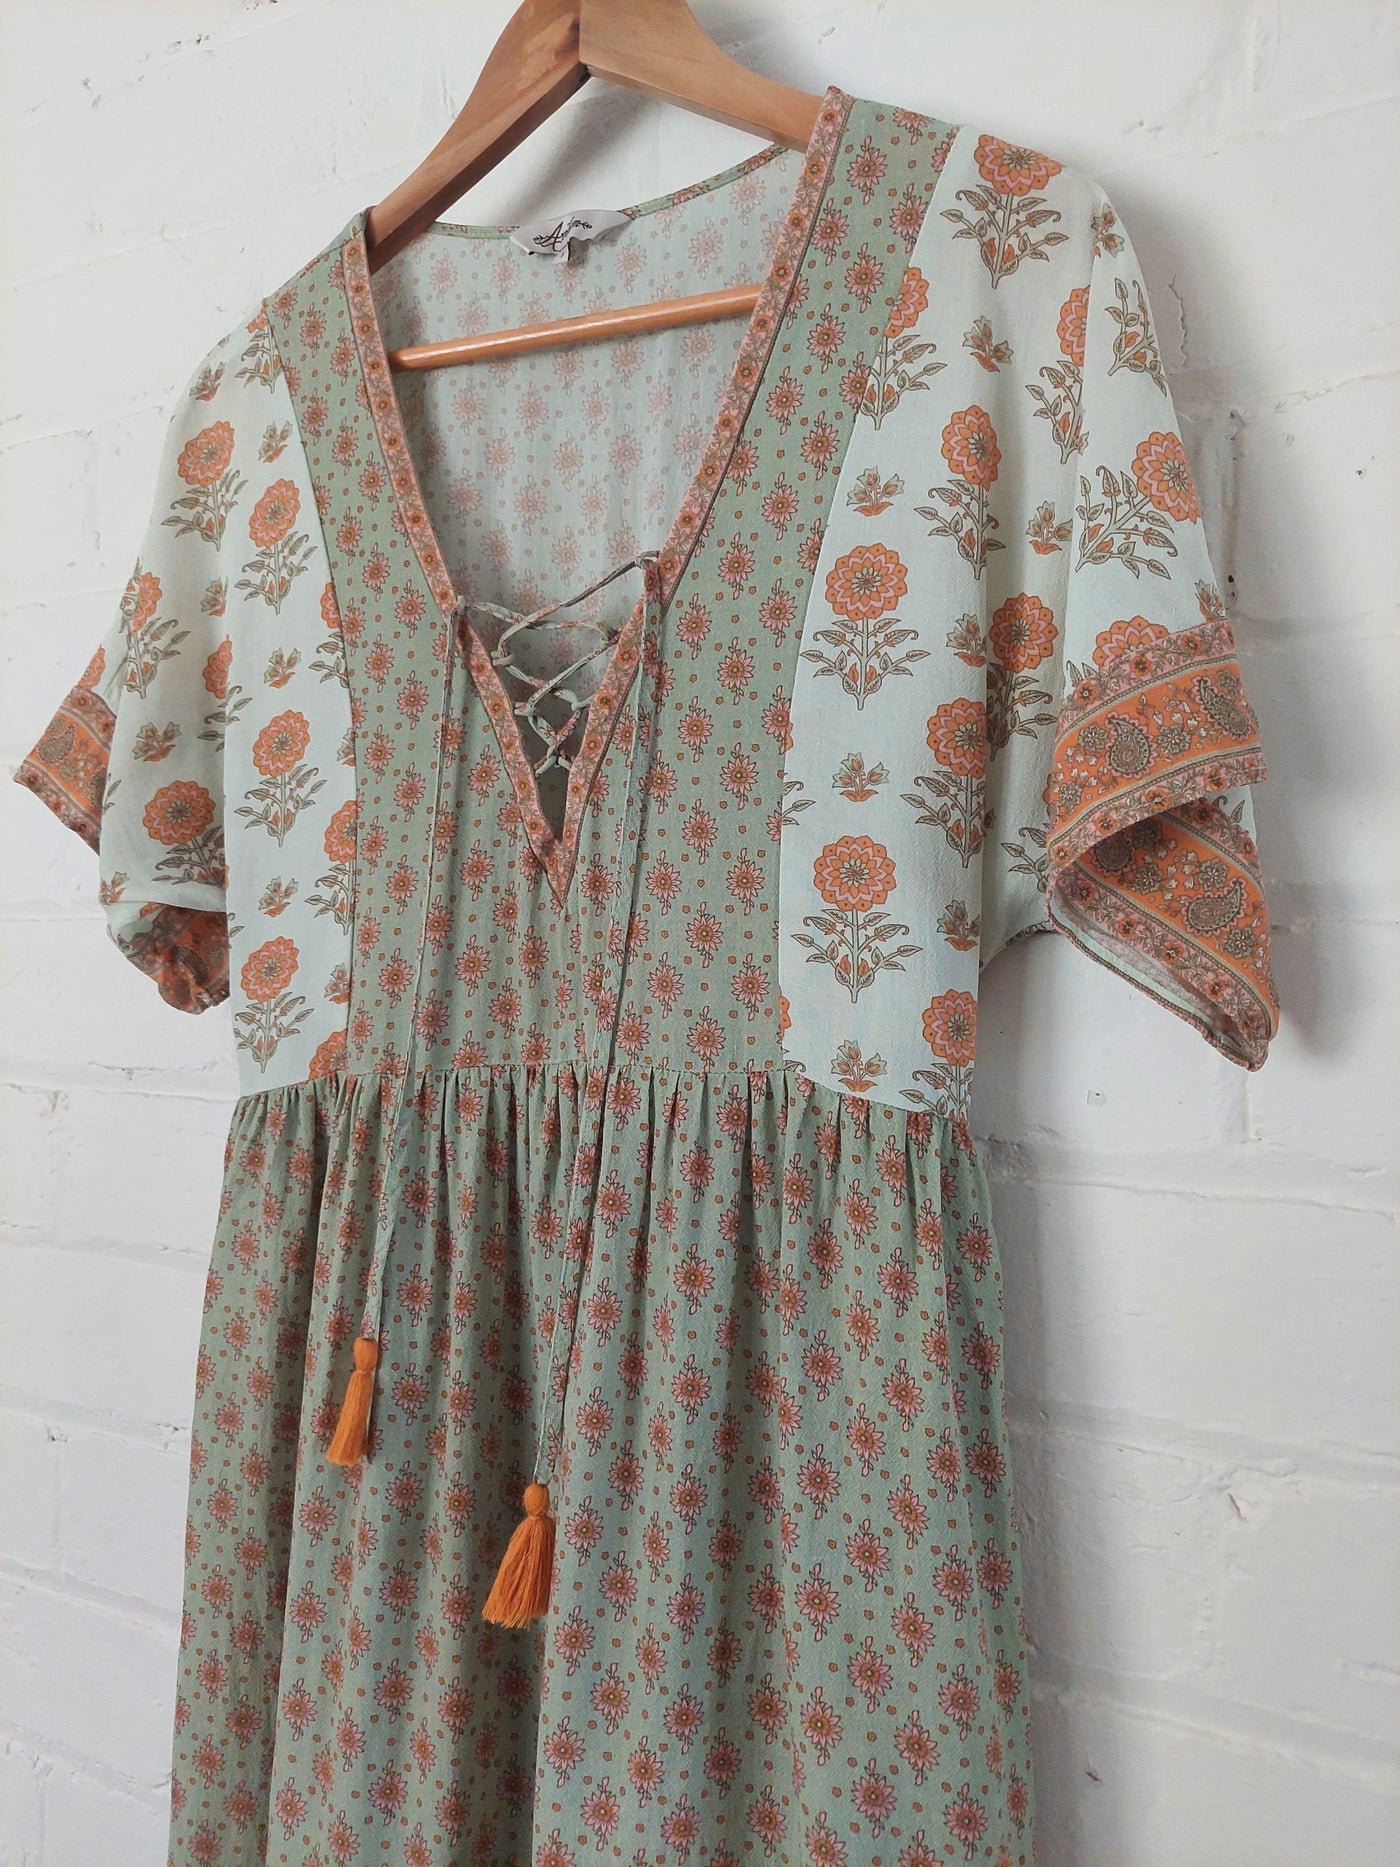 Arnhem Clothing Soriah Midi Dress in Pistachio, Size 8